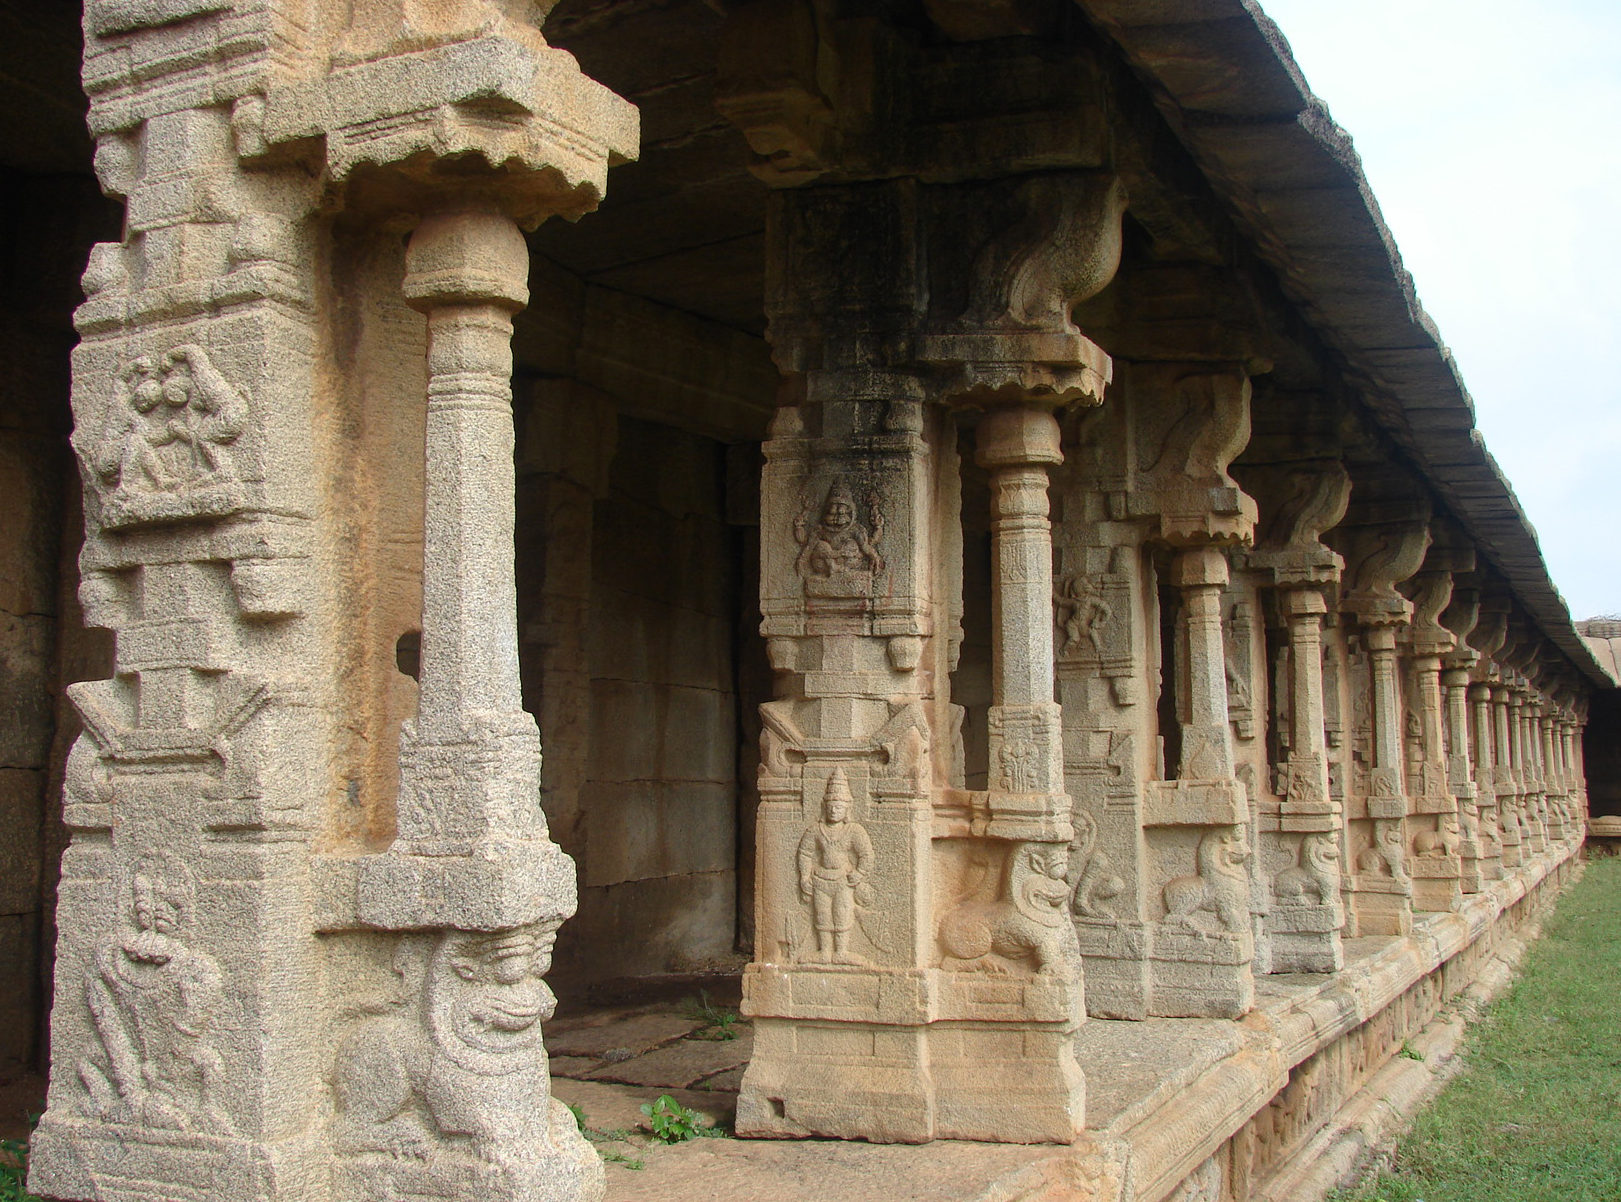 Inside the Achutaraya temple complex